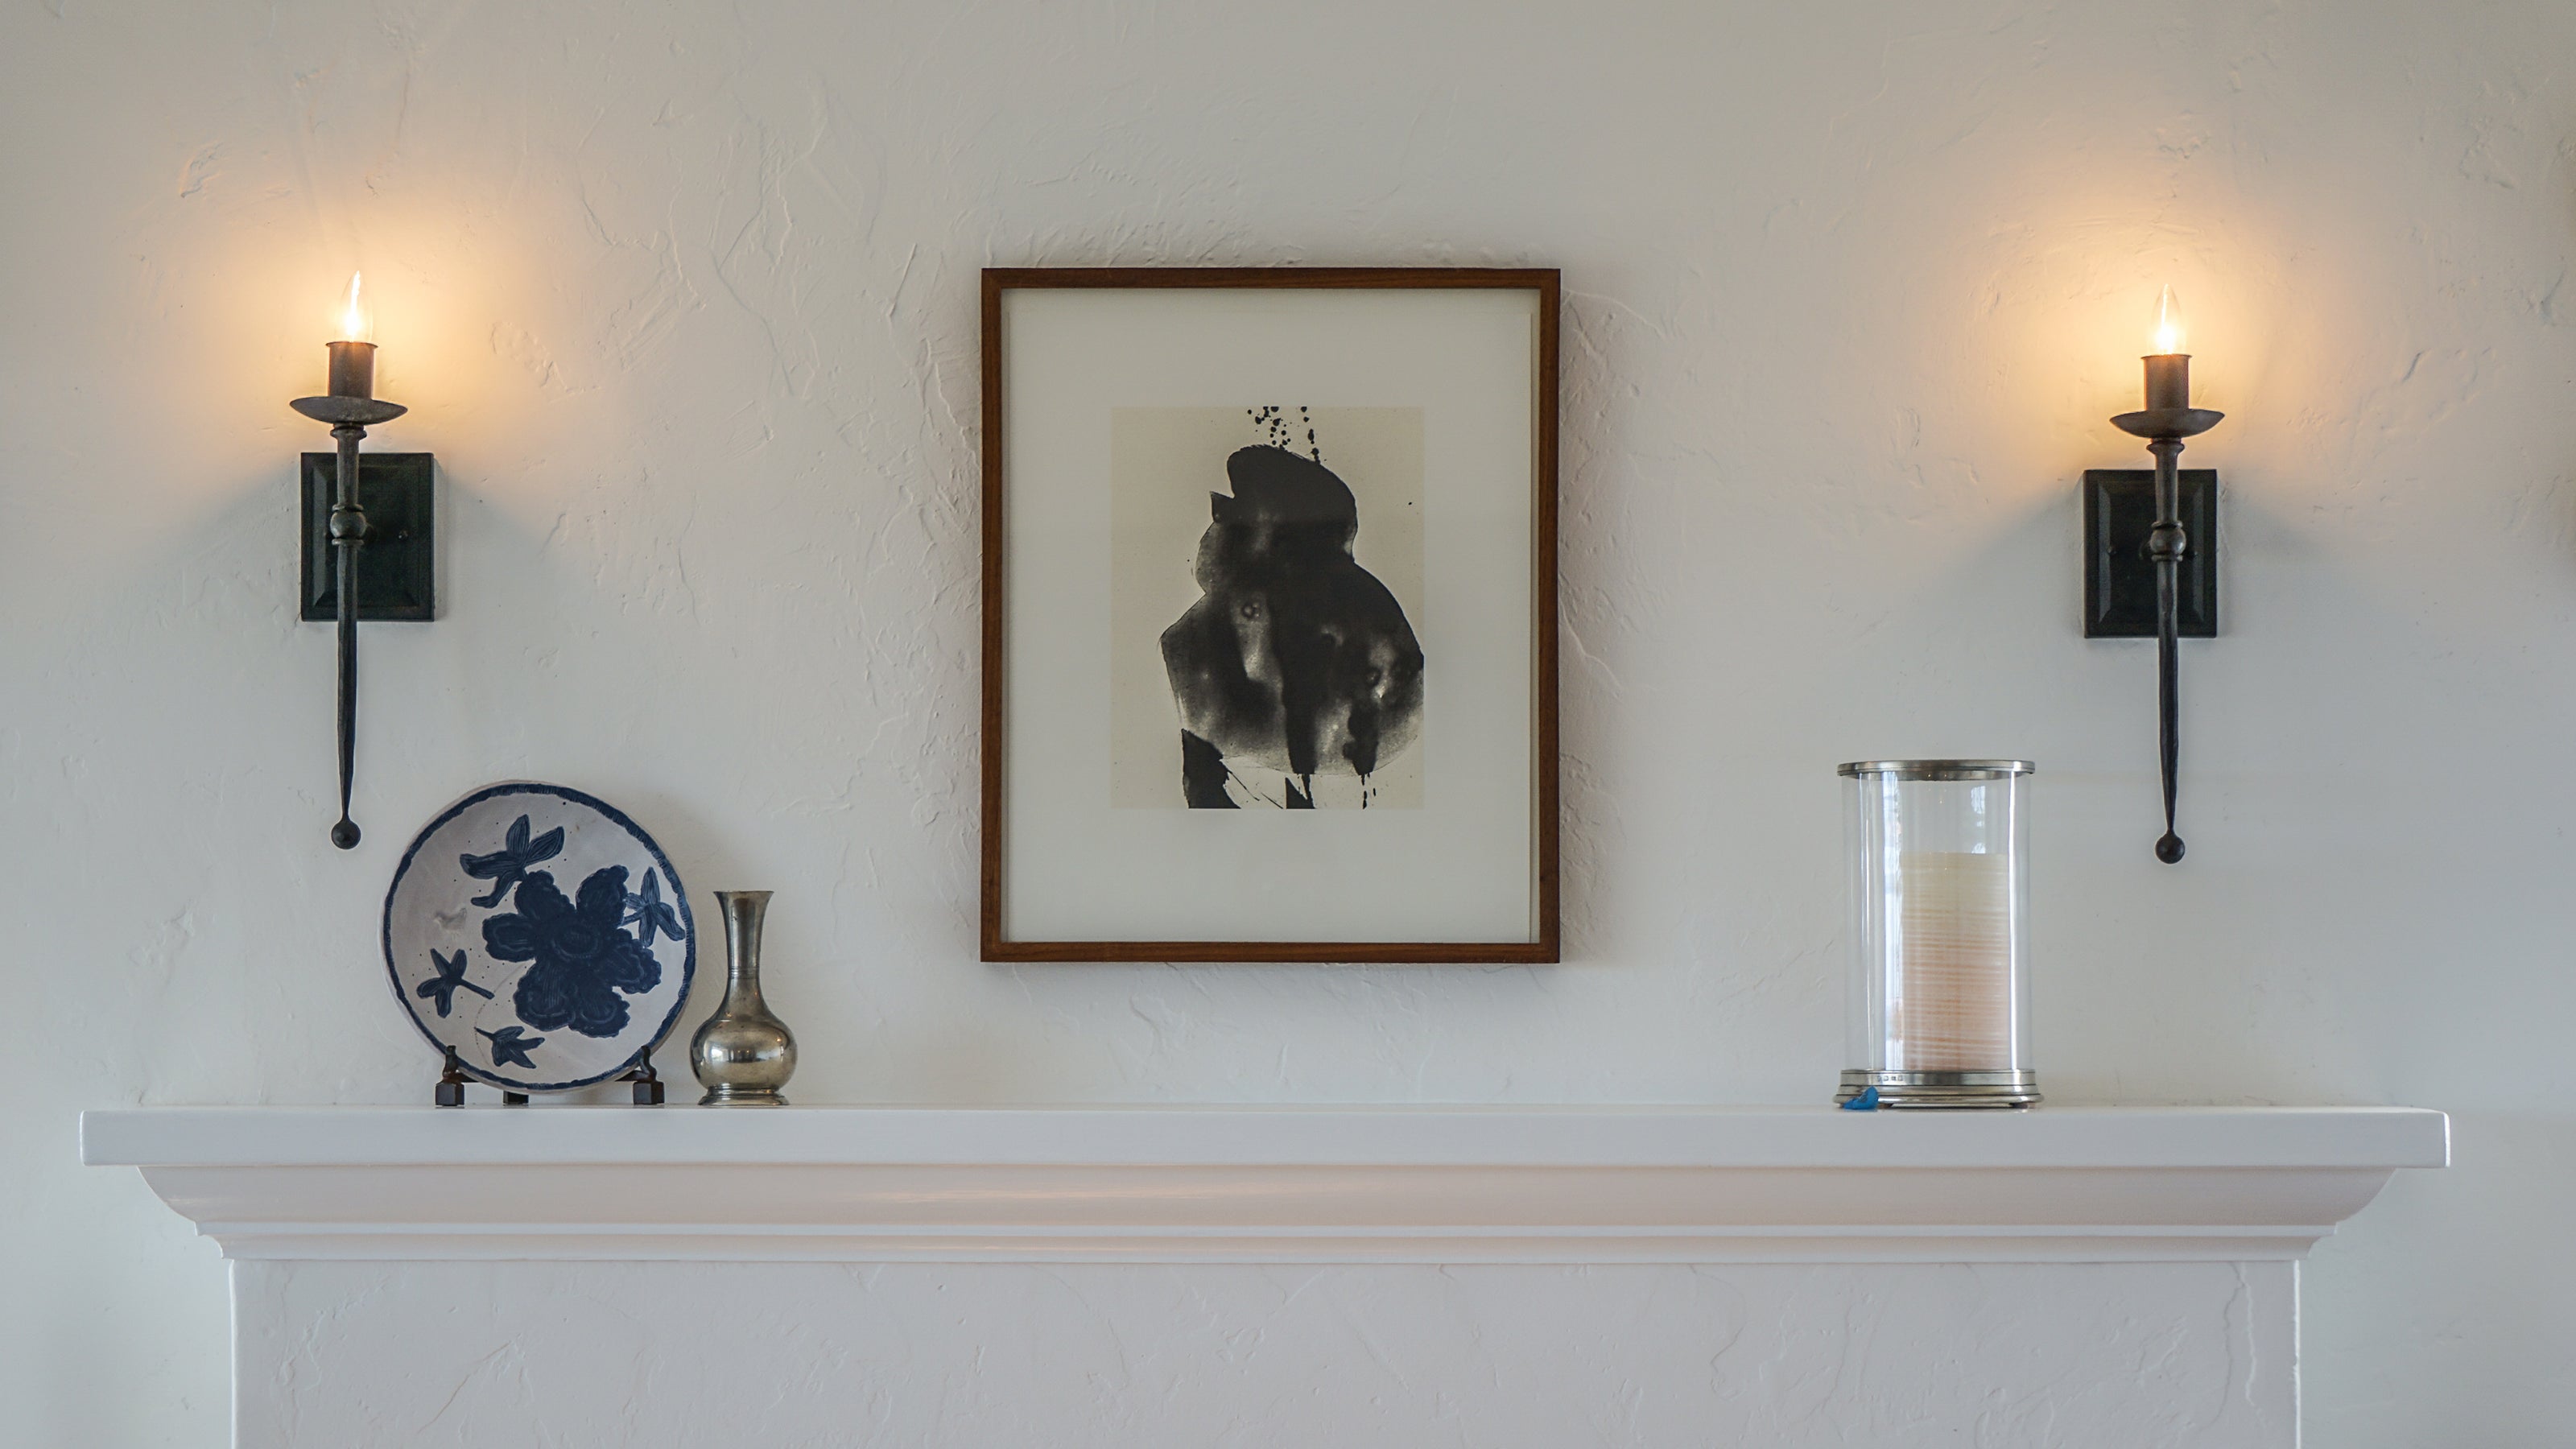 Marion Sconce Hand-forged Bespoke Interior Lighting Fixture Handmade by Santa Barbara Lighting Company